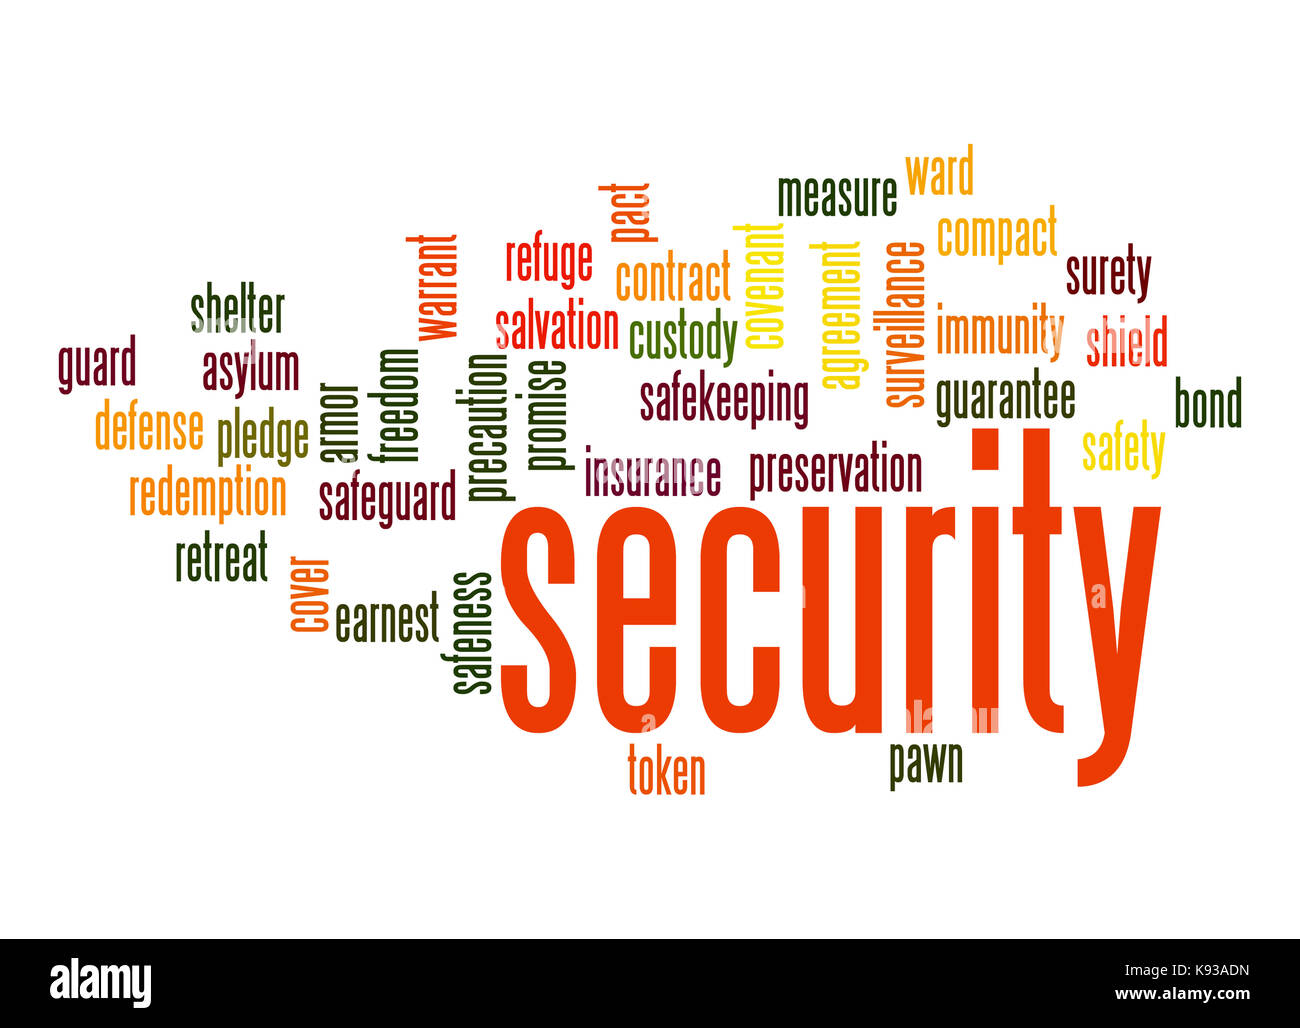 Security word cloud Stock Photo